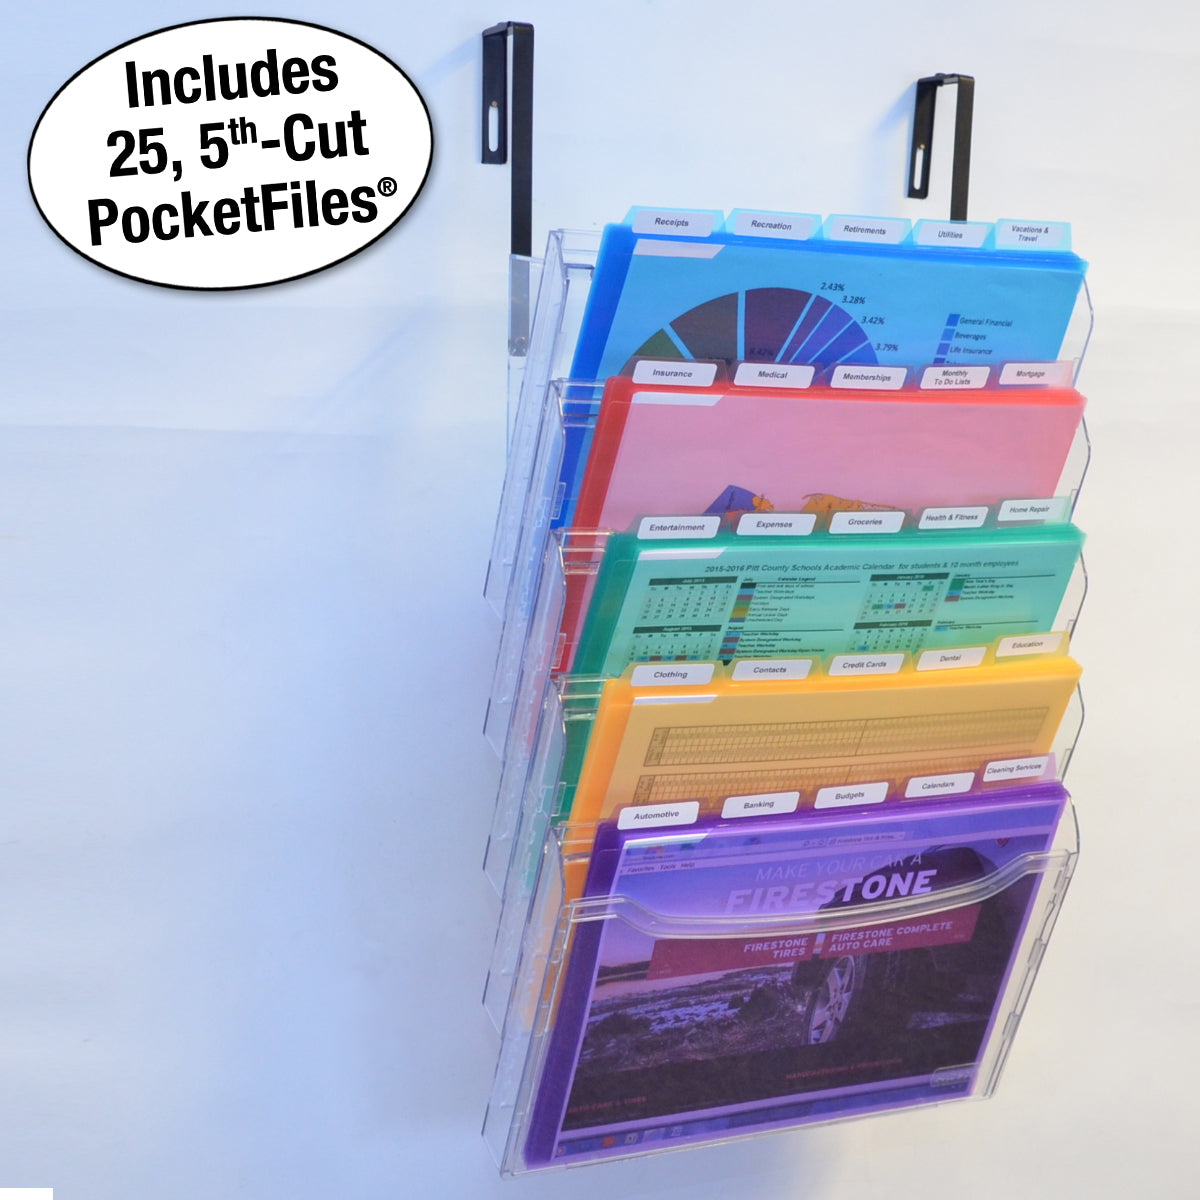 Ultimate Office Mini Mesh Desktop File Box Portable Project Organizer Complete with 25, 5th-Cut PocketFiles